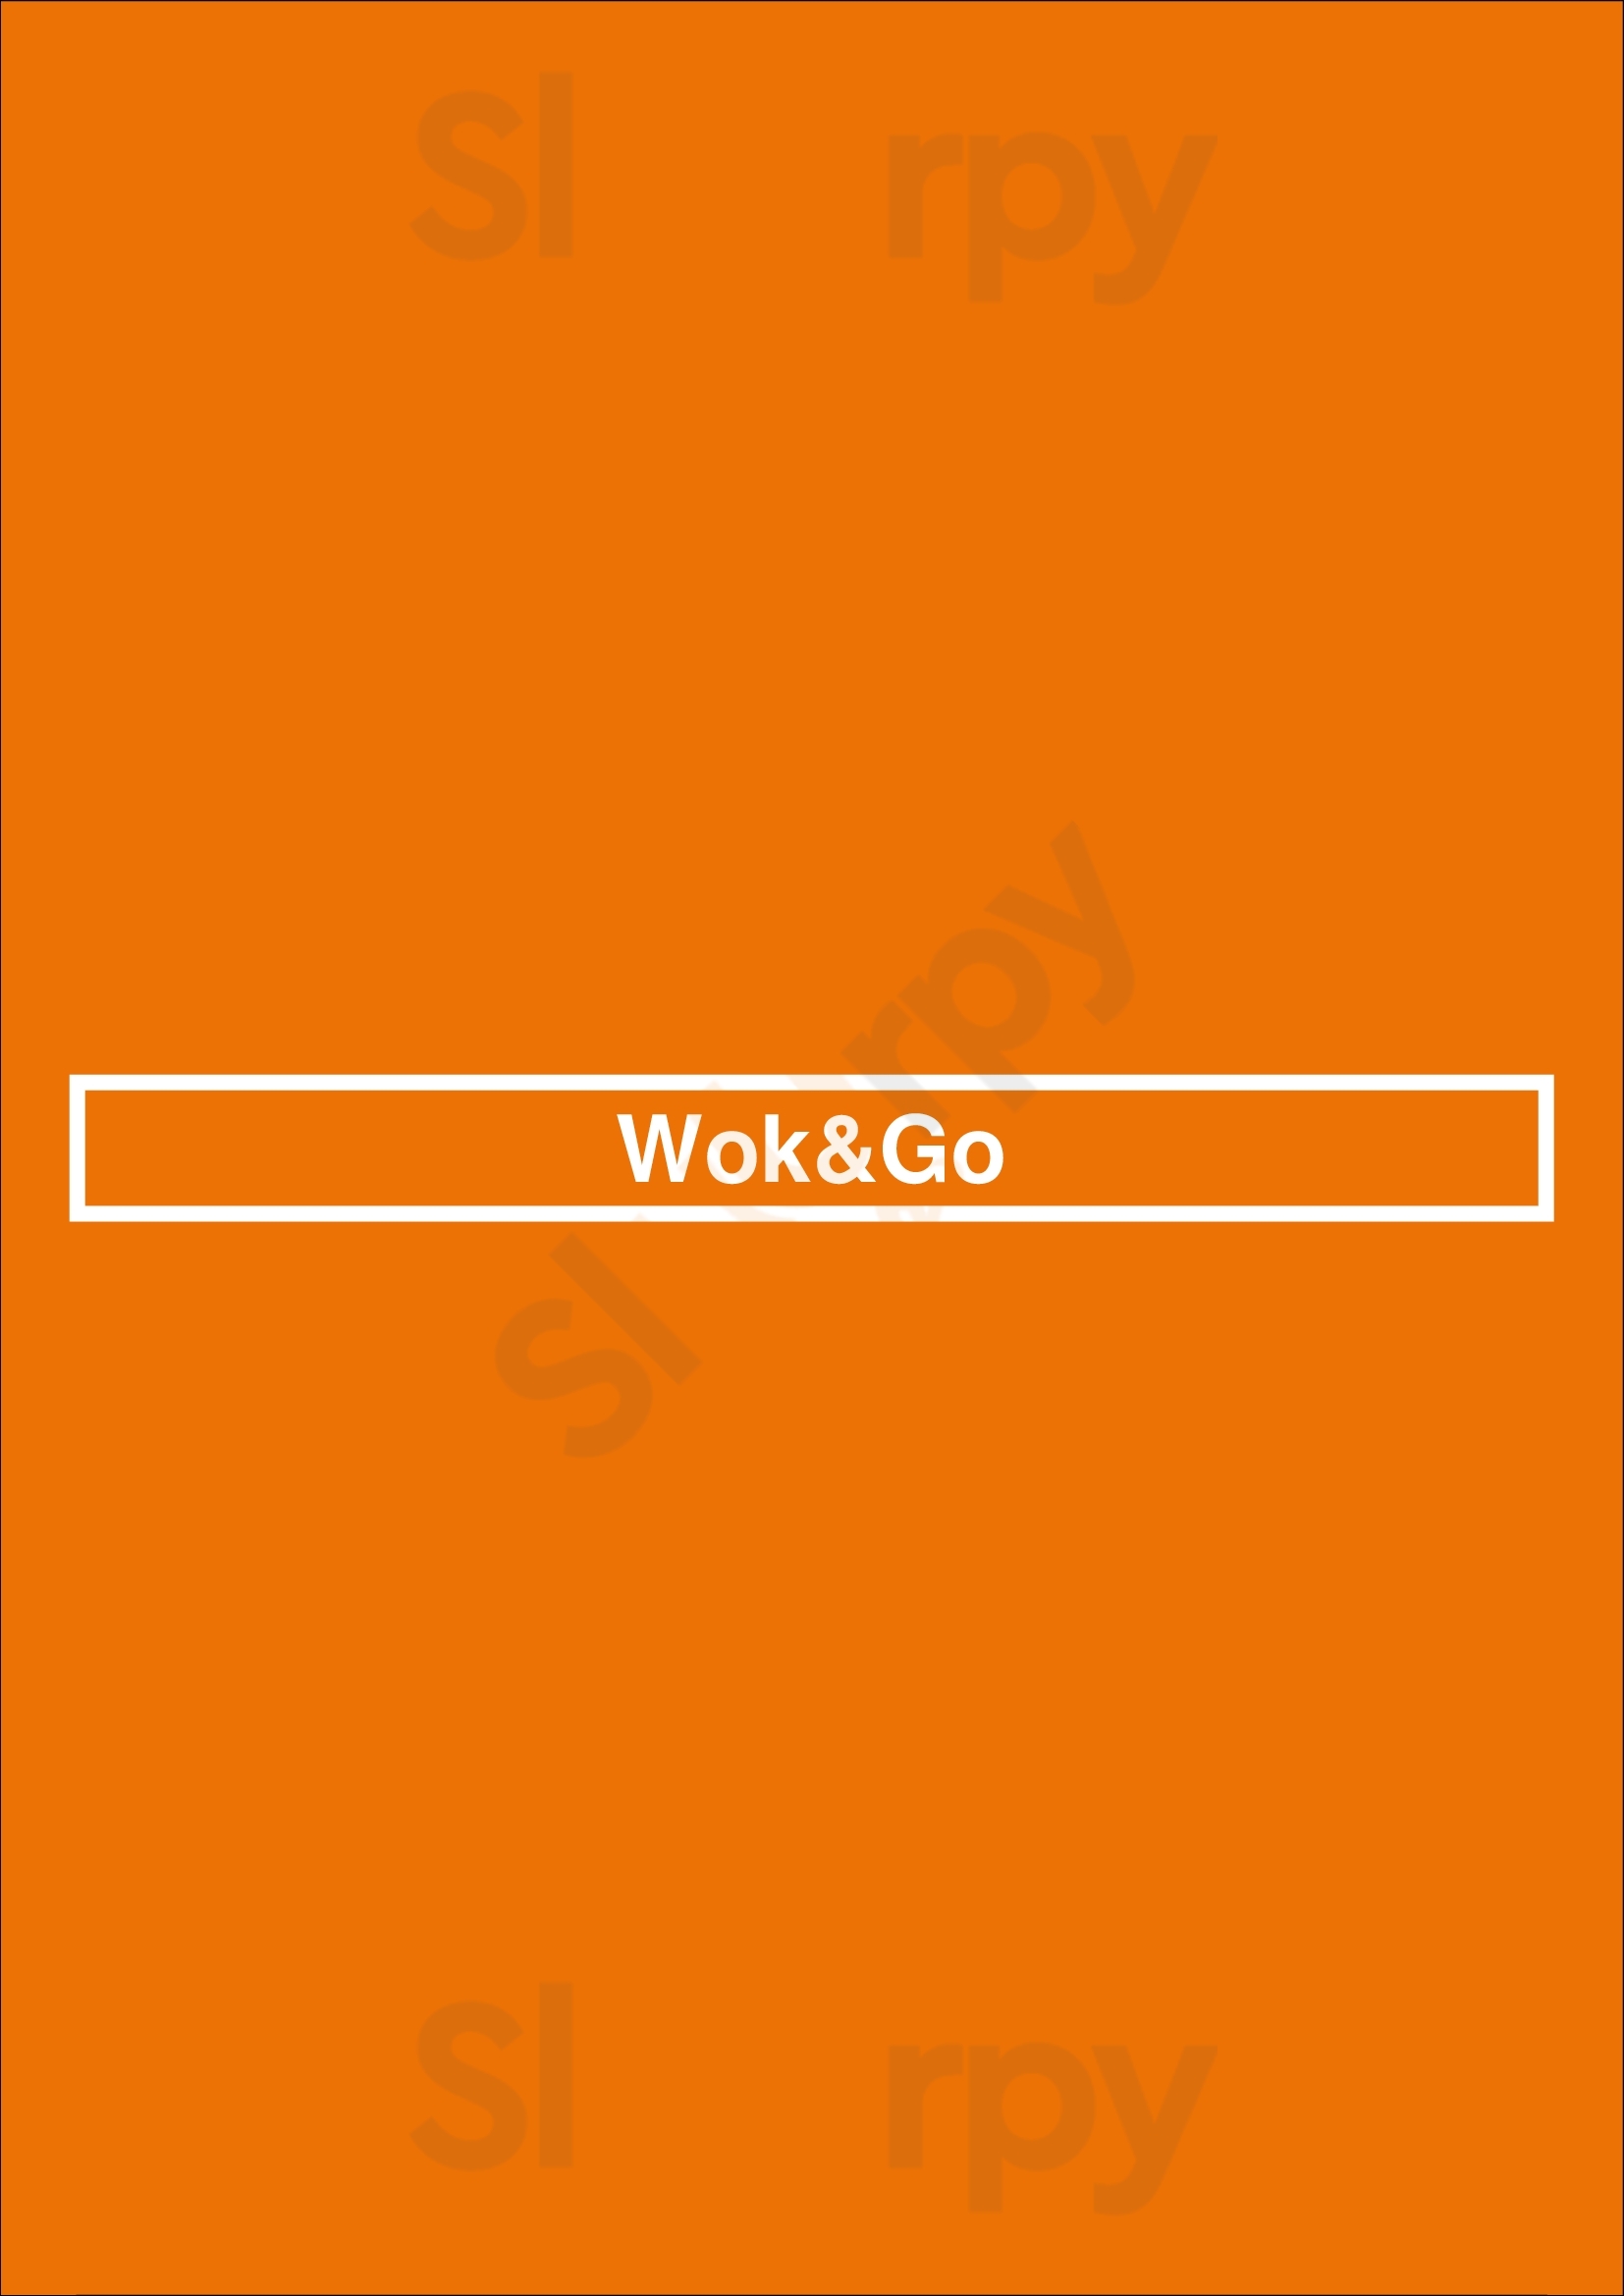 Wok&go Leeds Menu - 1